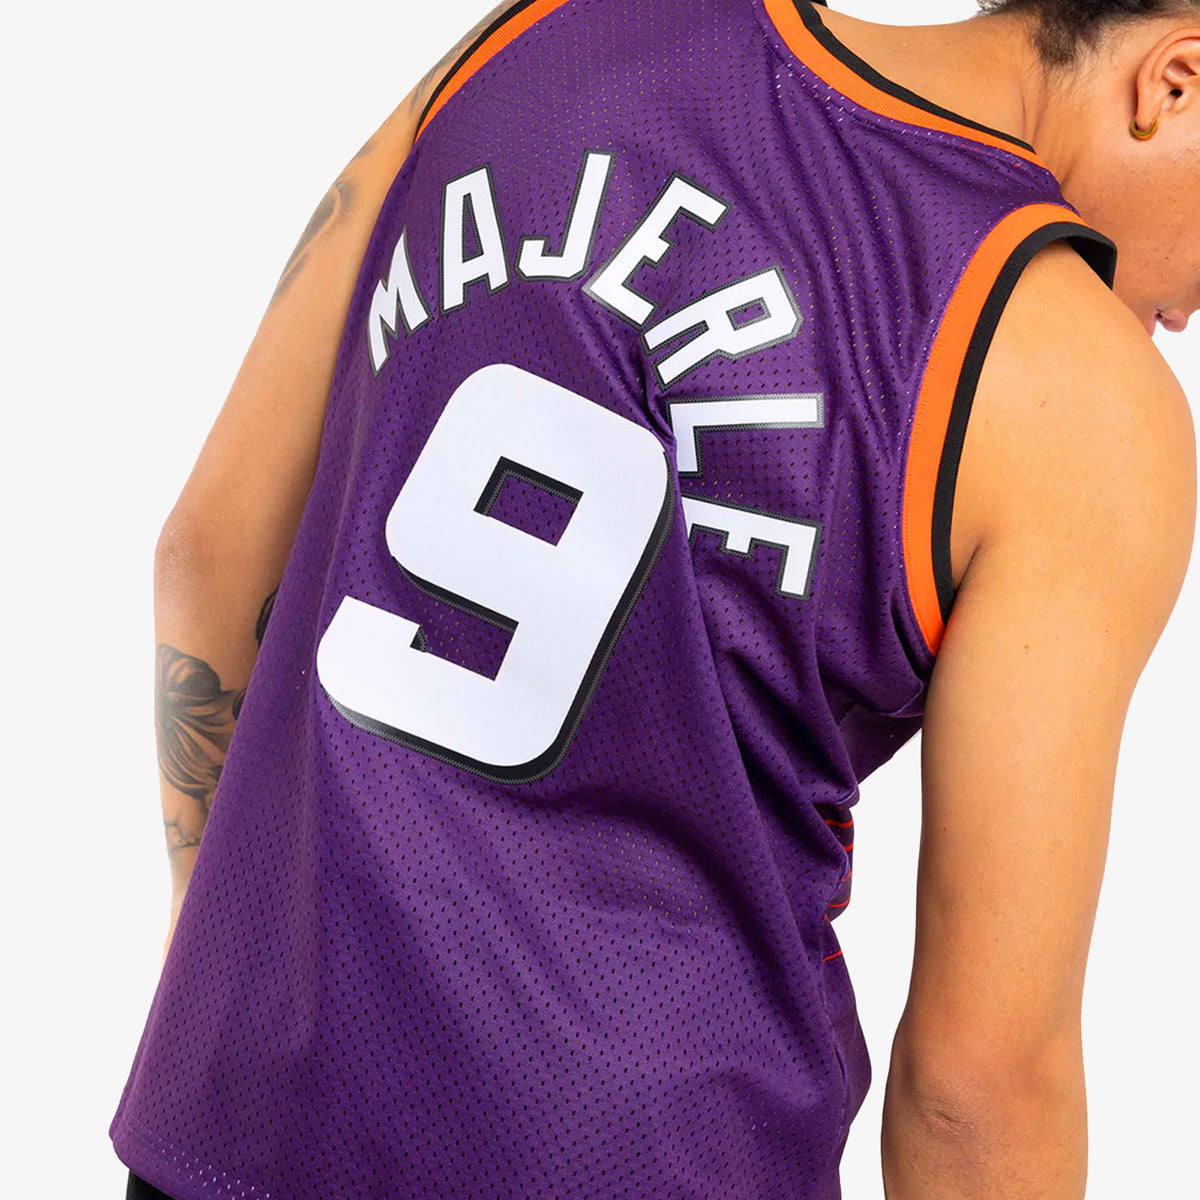 Dan Majerle Phoenix Suns 92-93 HWC Swingman Jersey - Purple - Throwback